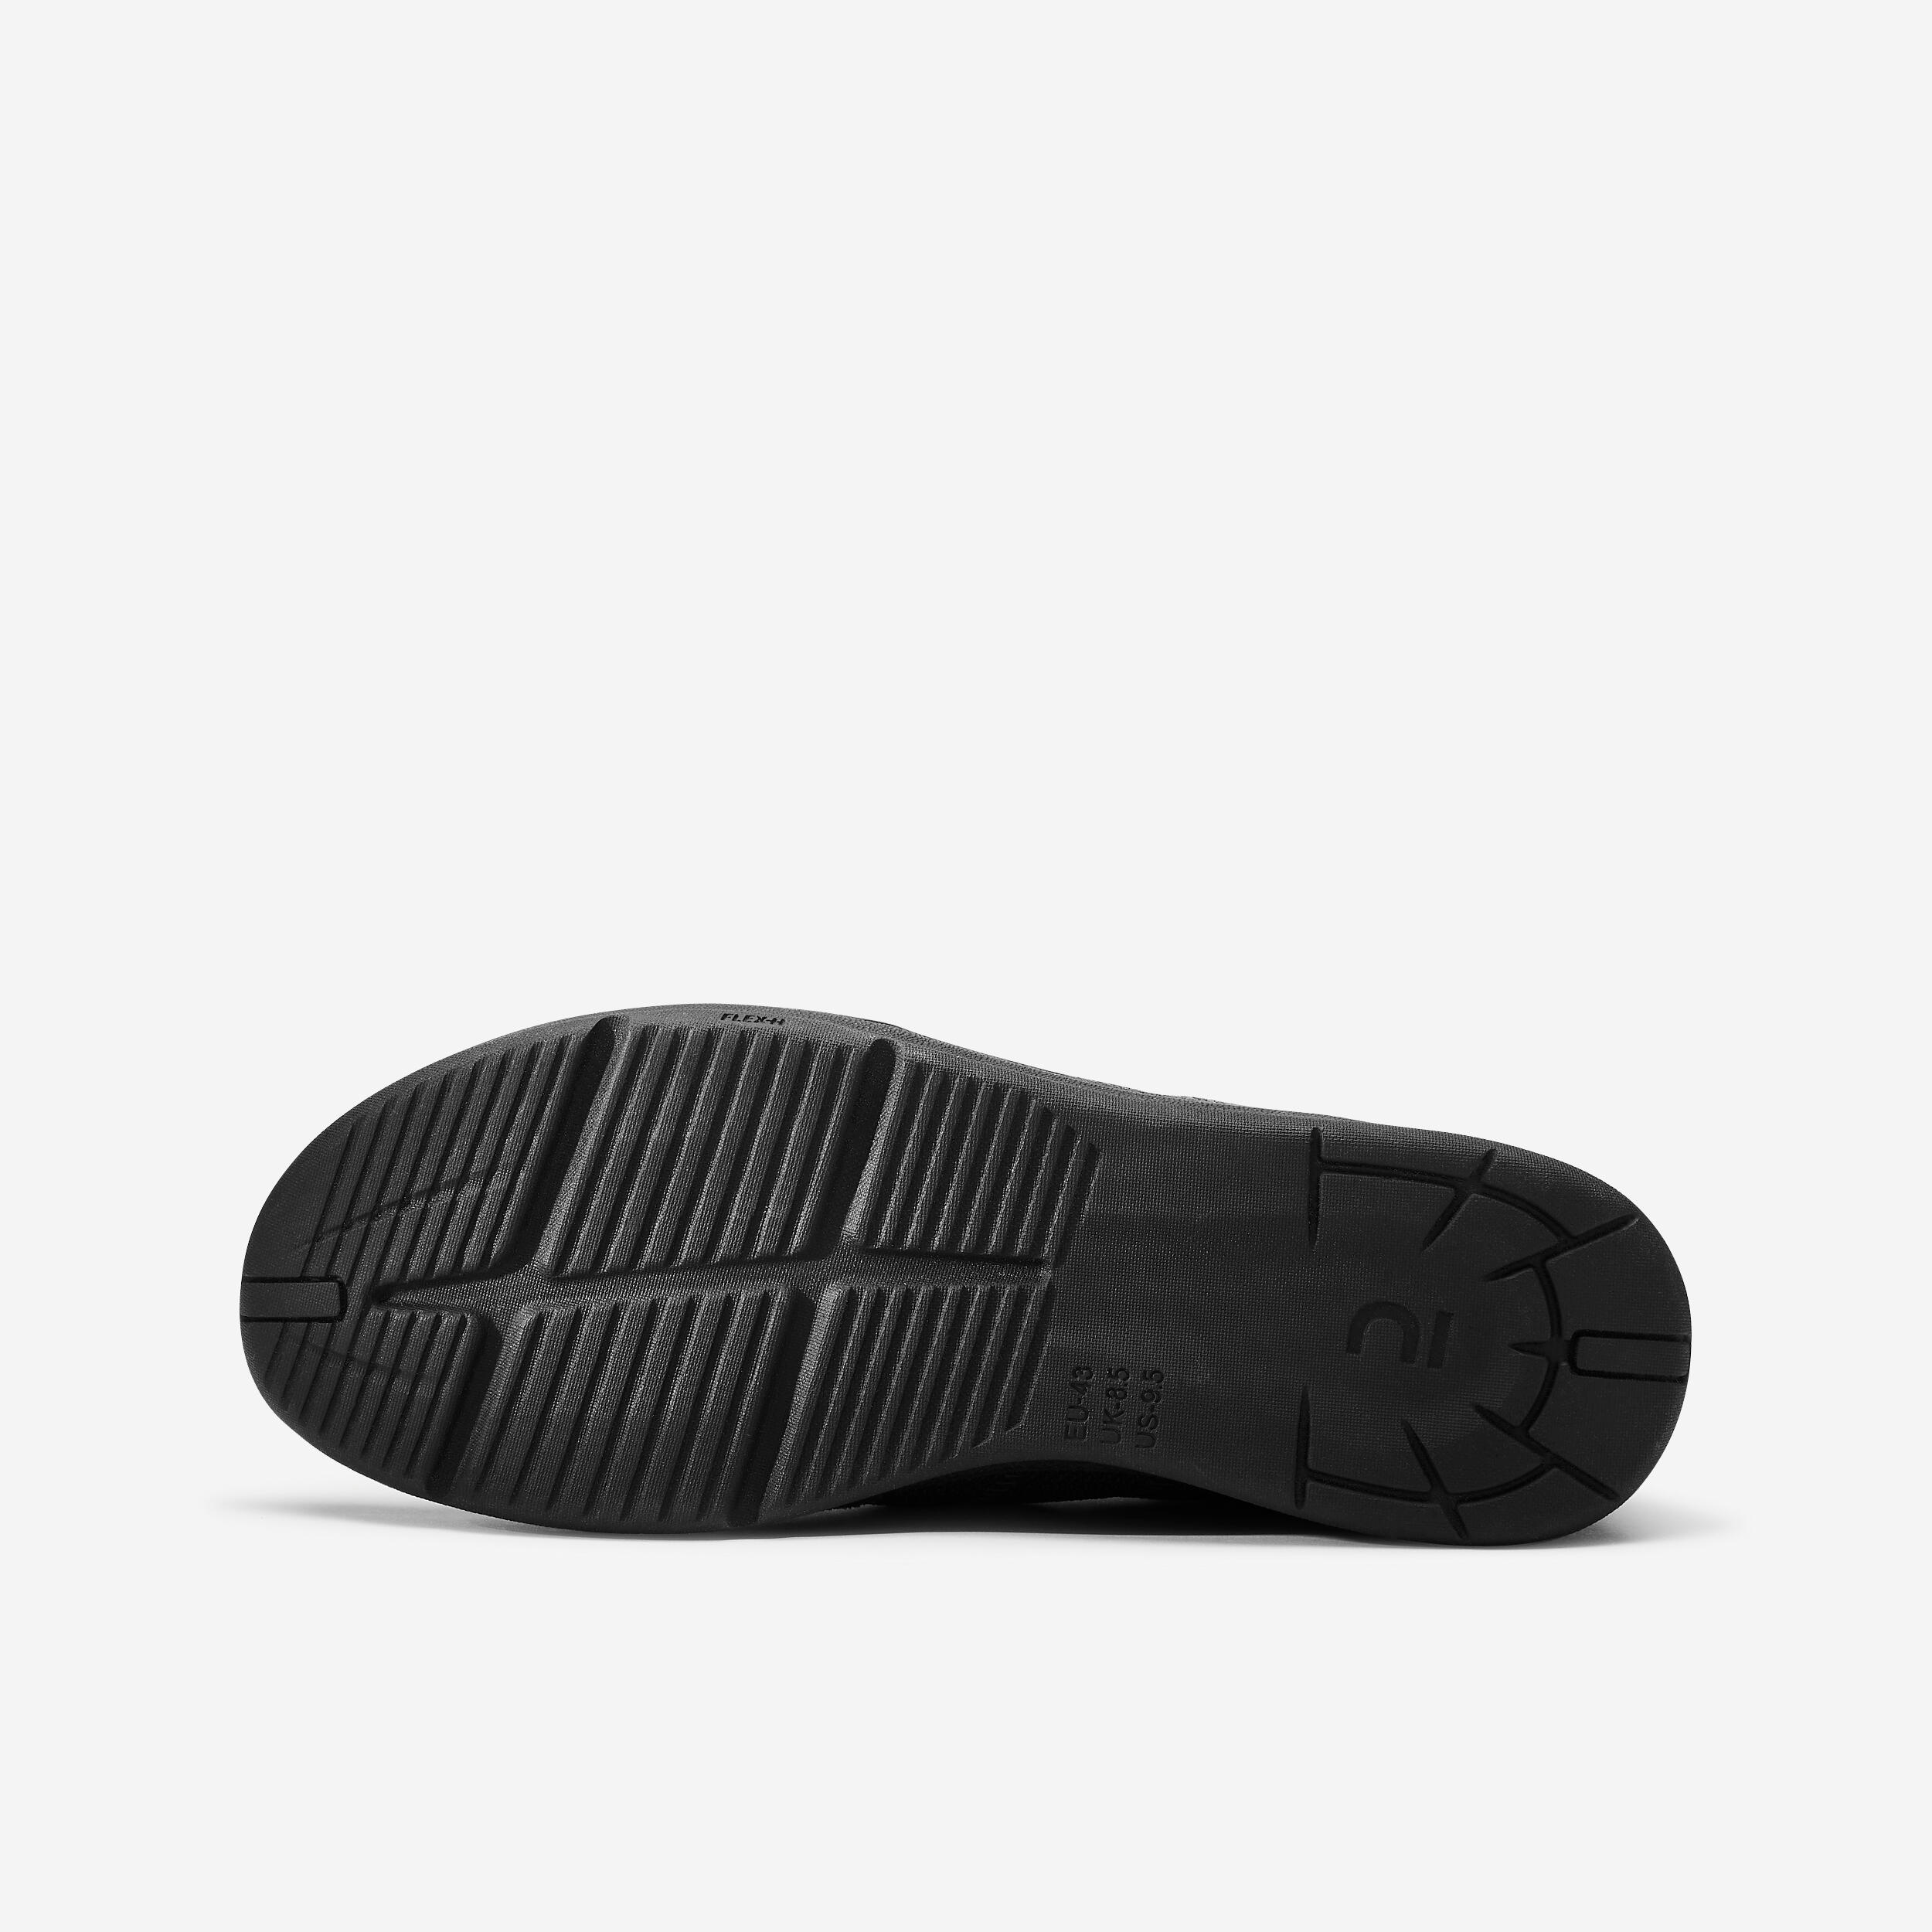 Men's Urban Walking Shoes Walk Protect Mesh - Dark Grey 8/8